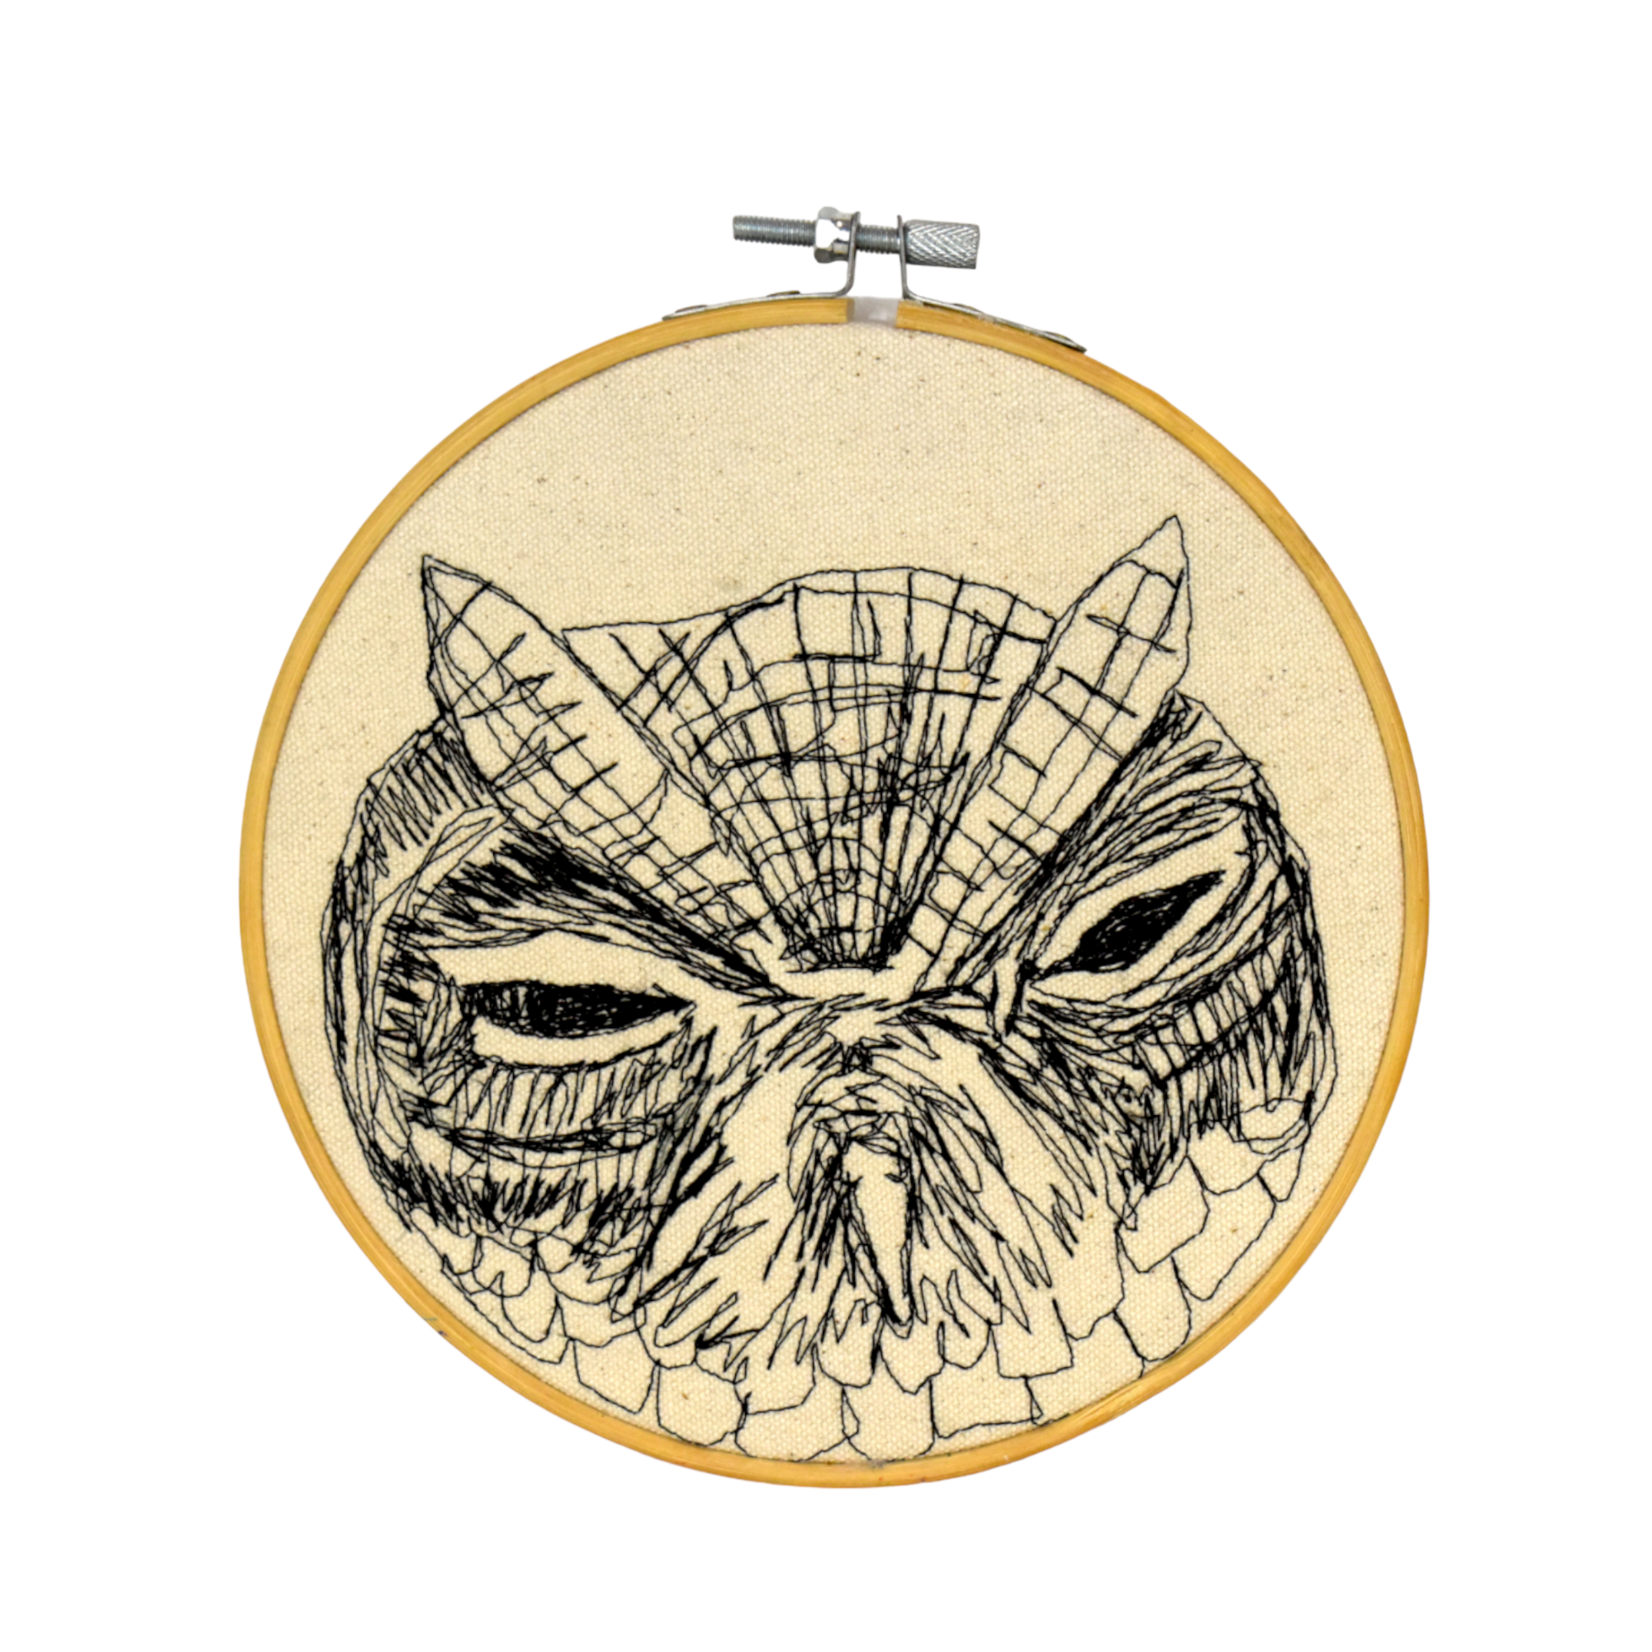 JENNYJEN42 Wooden Embroidery Hoop Flummulated Owl